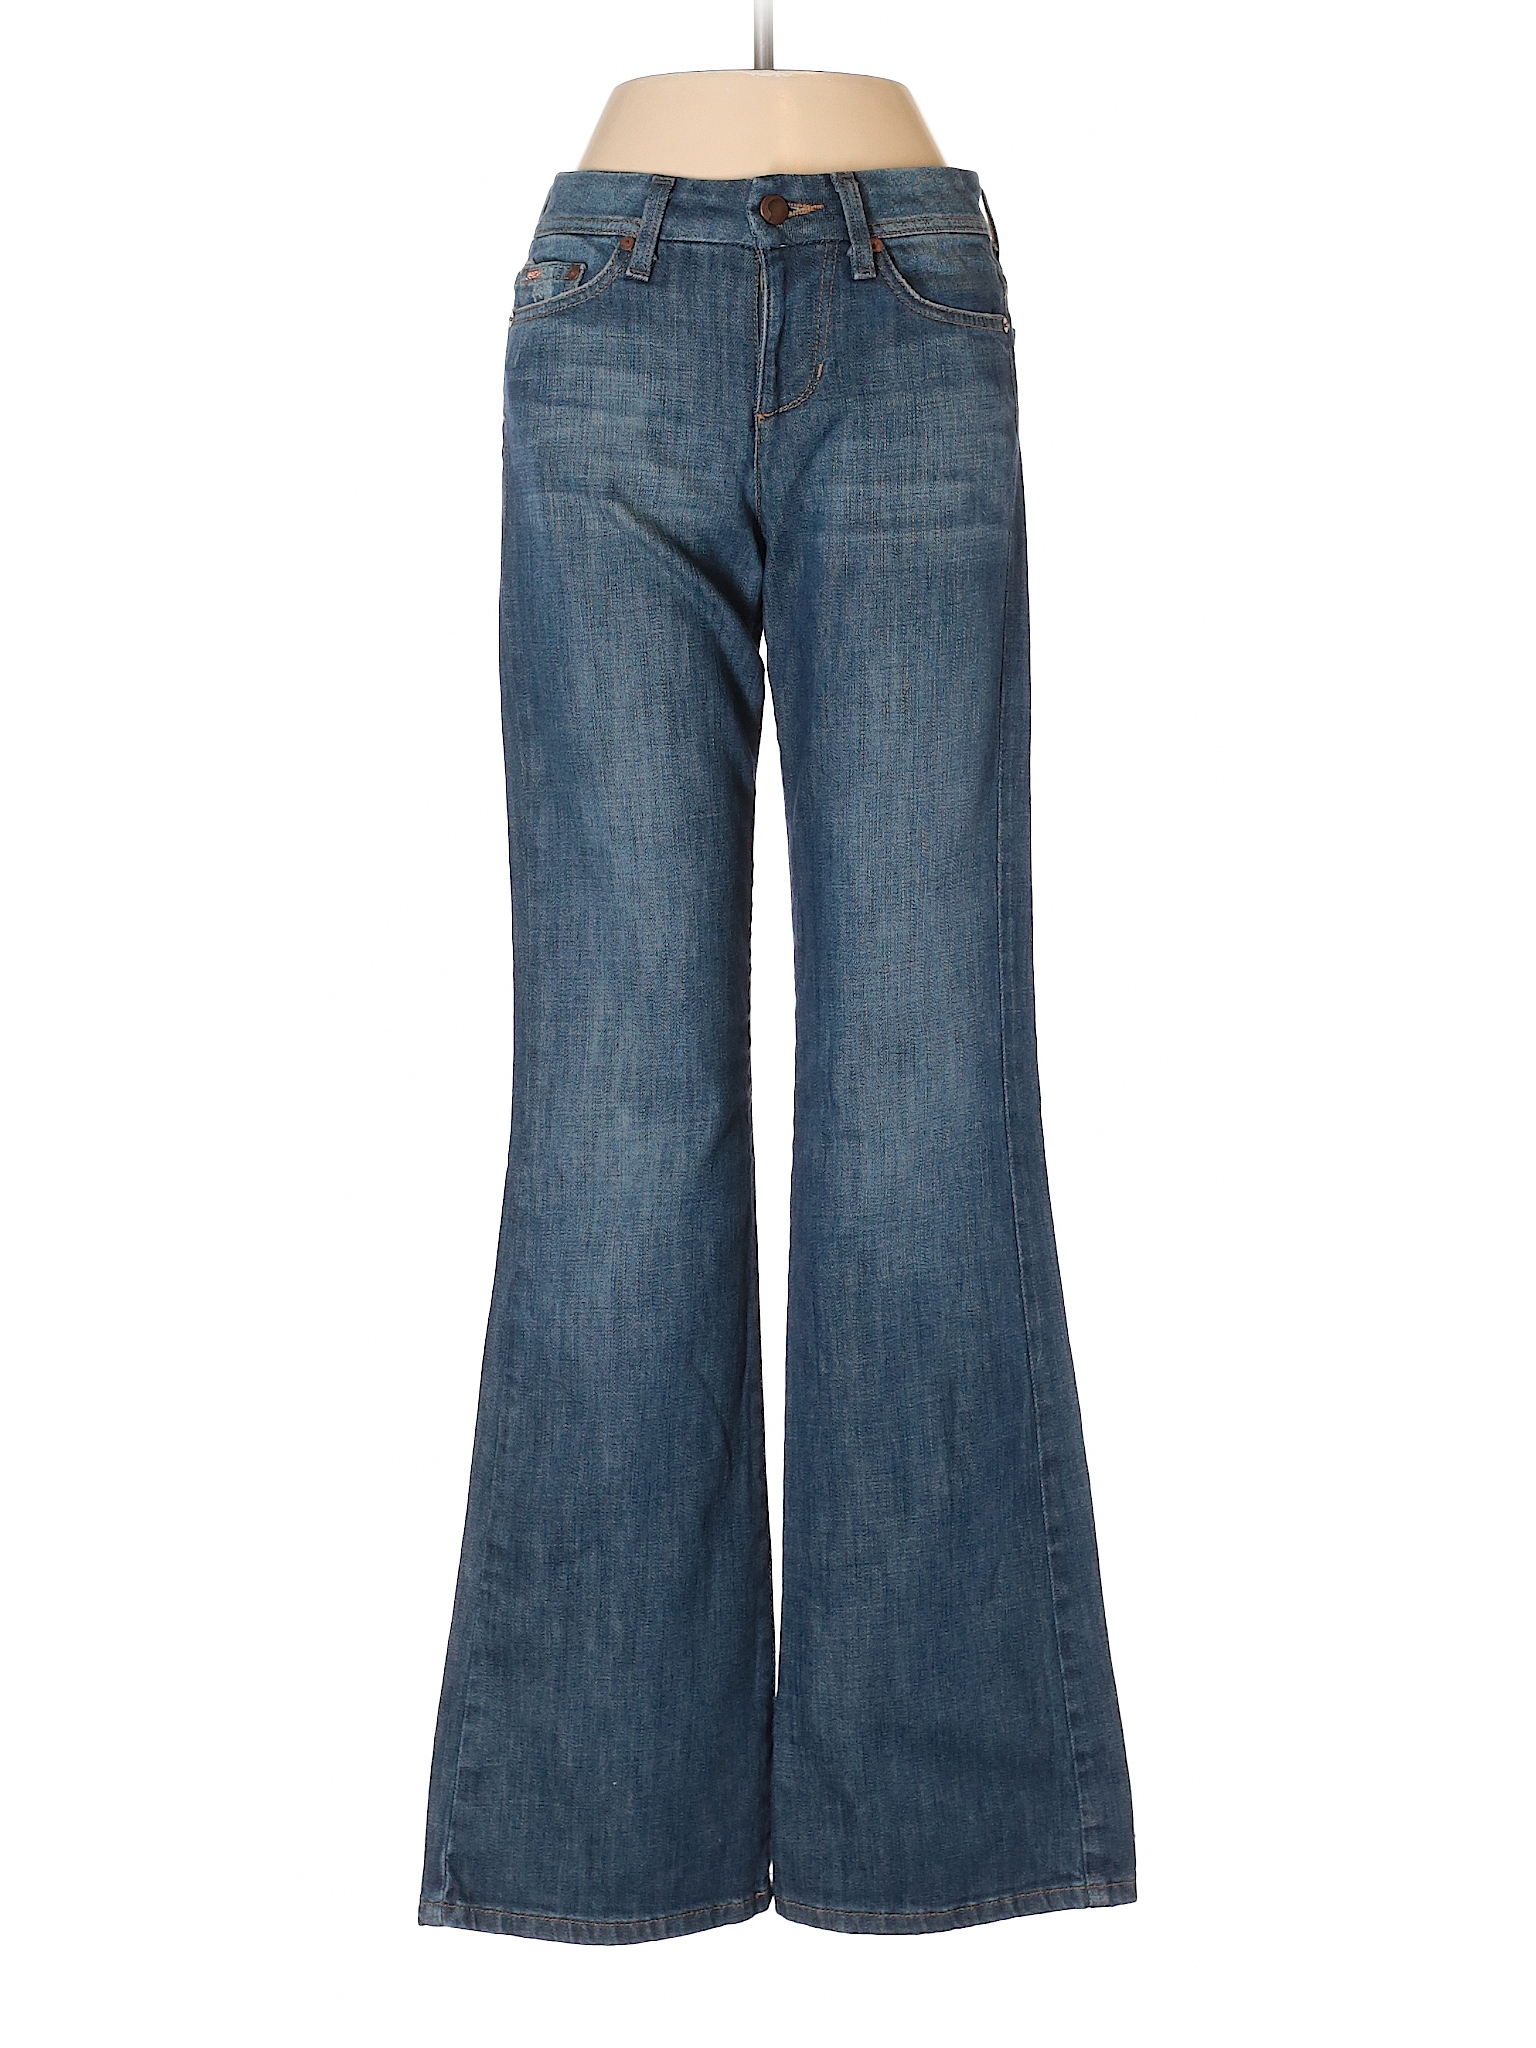 Joe's Jeans Solid Navy Blue Jeans 24 Waist - 86% off | thredUP